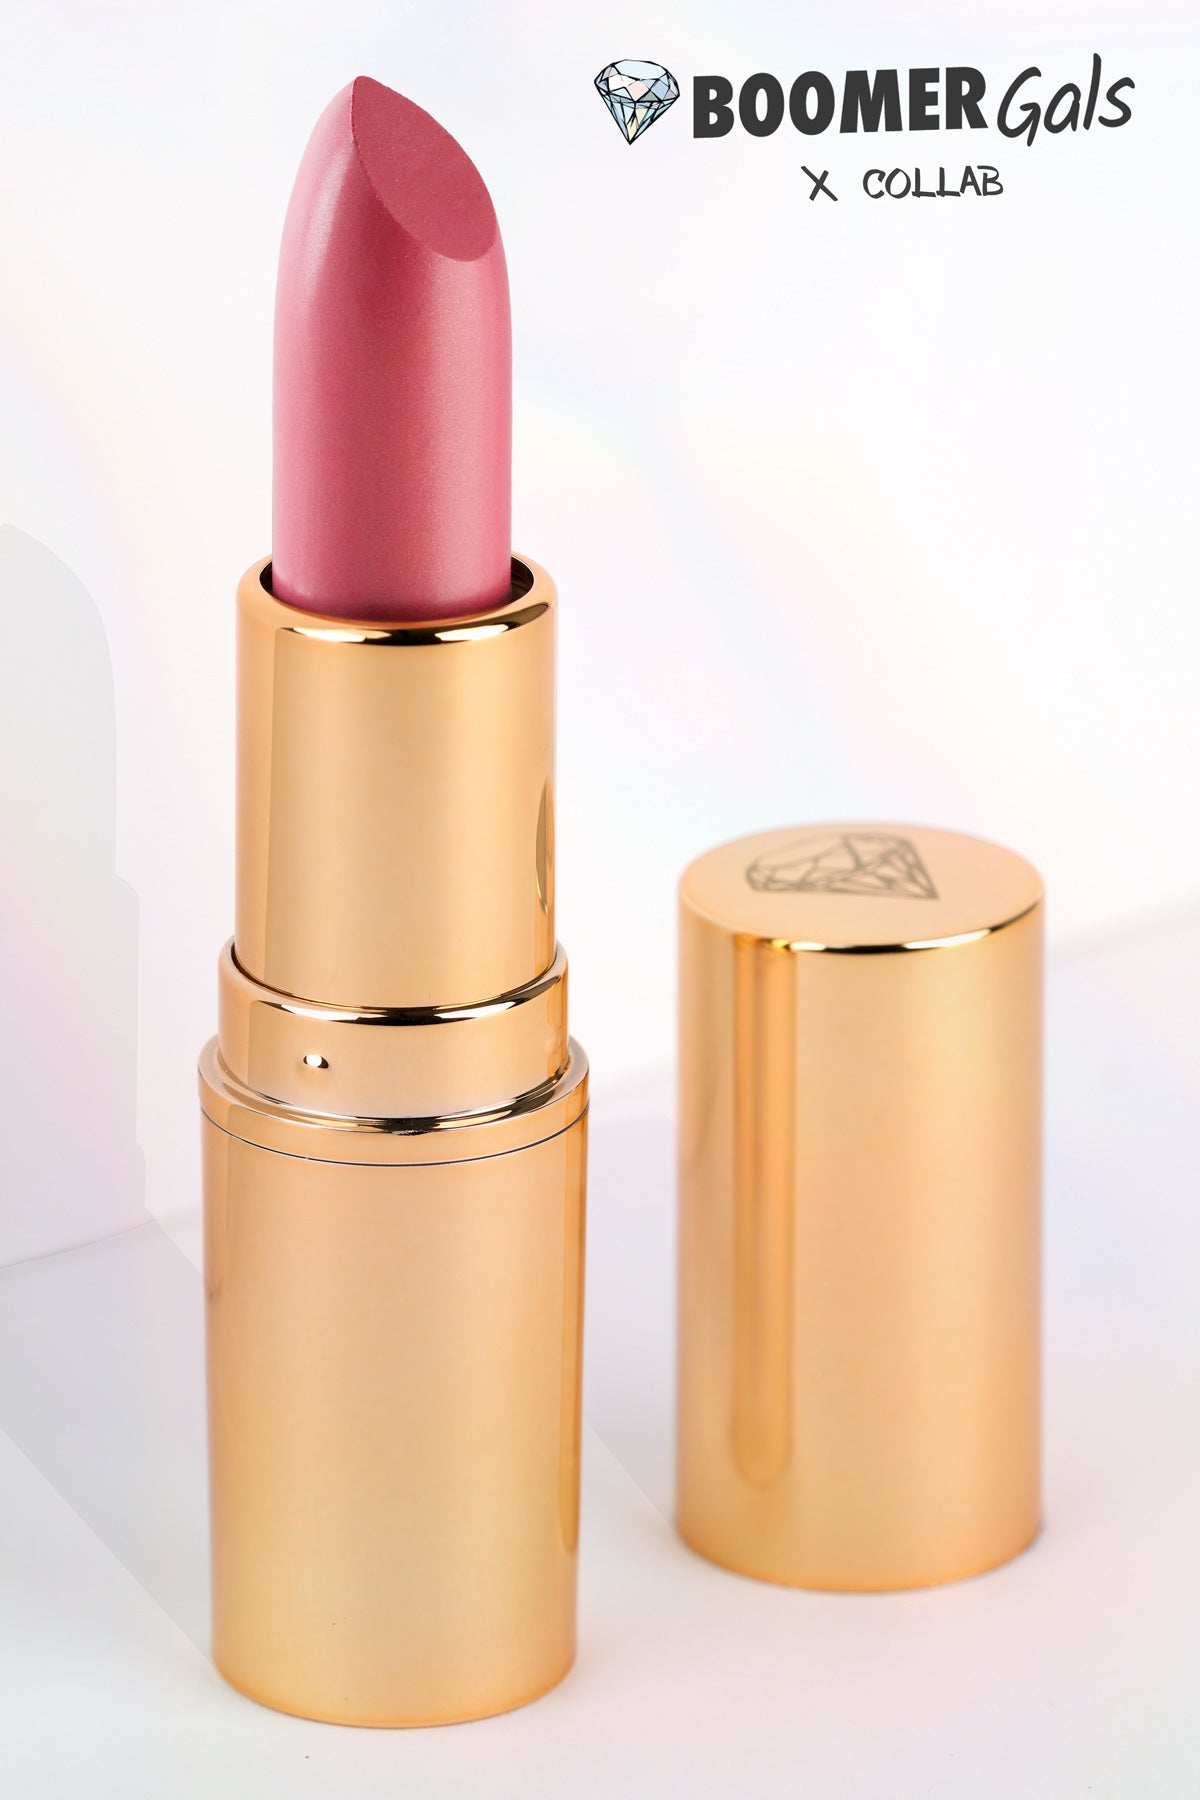 'Kelly’s deep beautiful pink' Boomer Gals - Ultra Lux Hydrating Lipstick